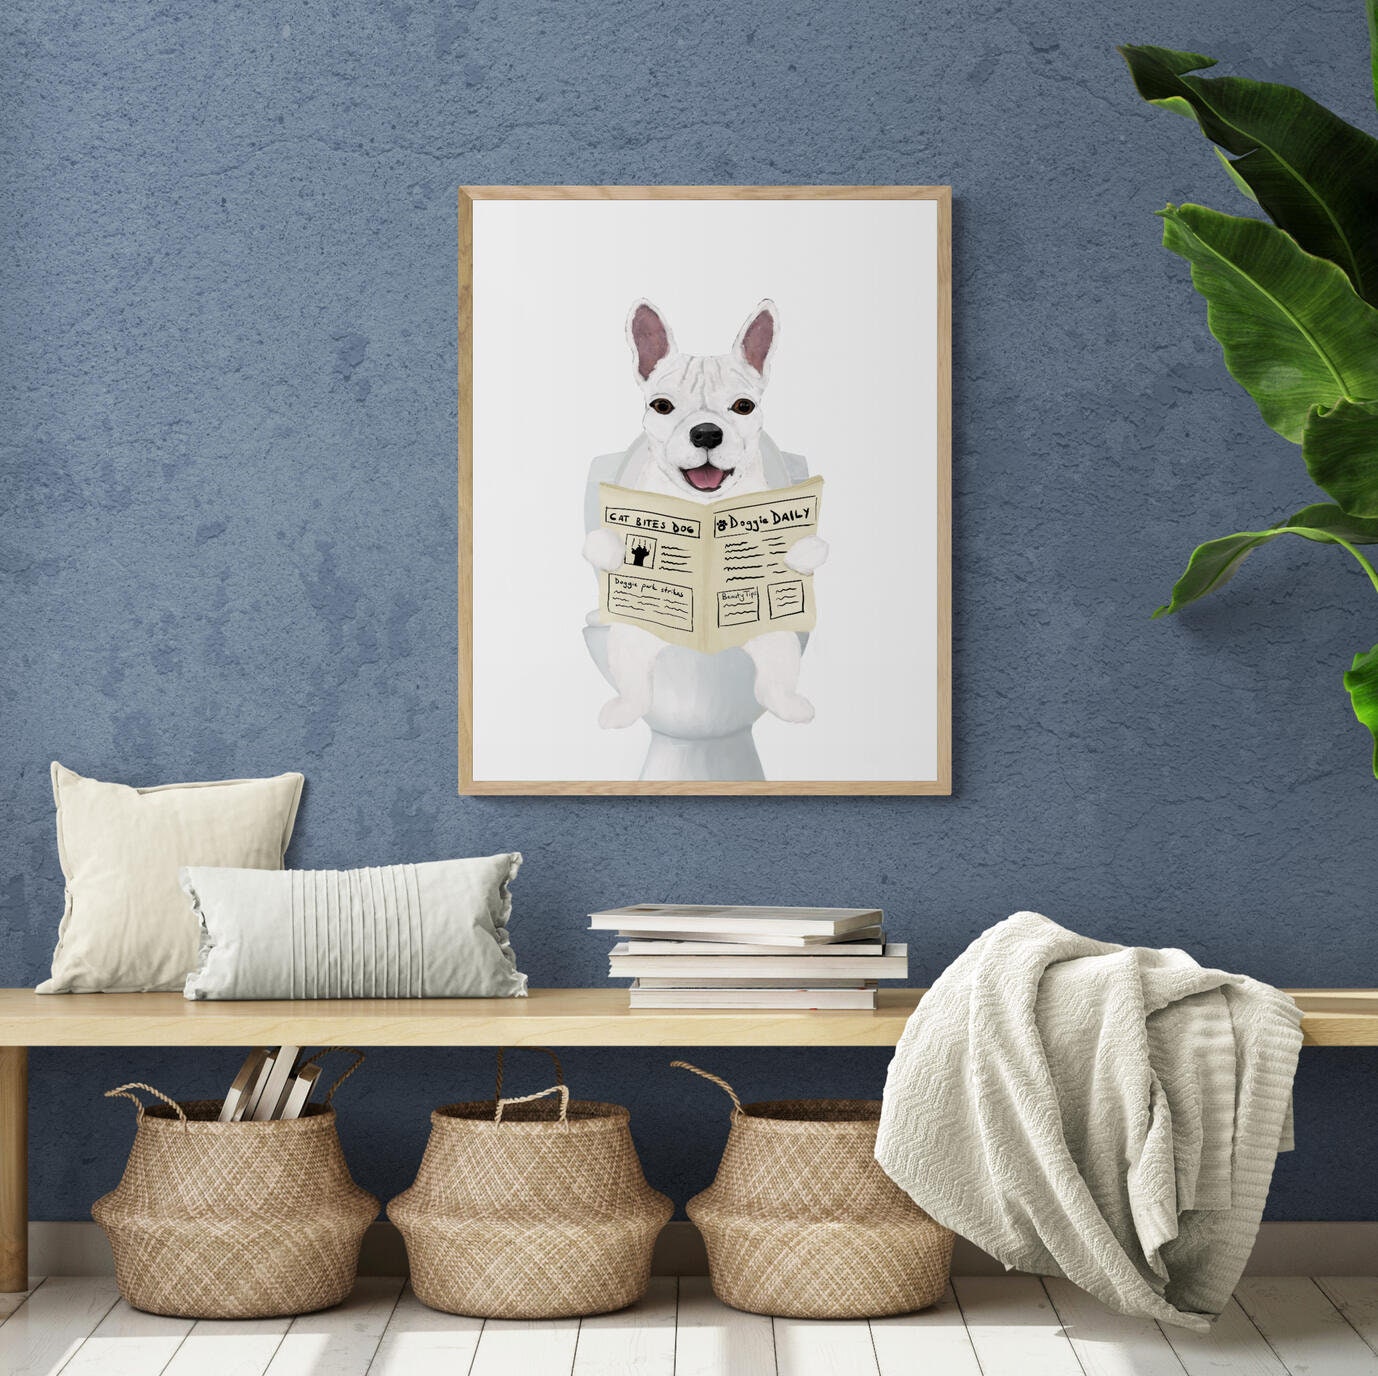 White French Bulldog On Toilet Print, Dog On Toilet Art, Bathroom Art, Bathroom Dog Painting, Frenchie On Toilet Print, Dog Lover Gift